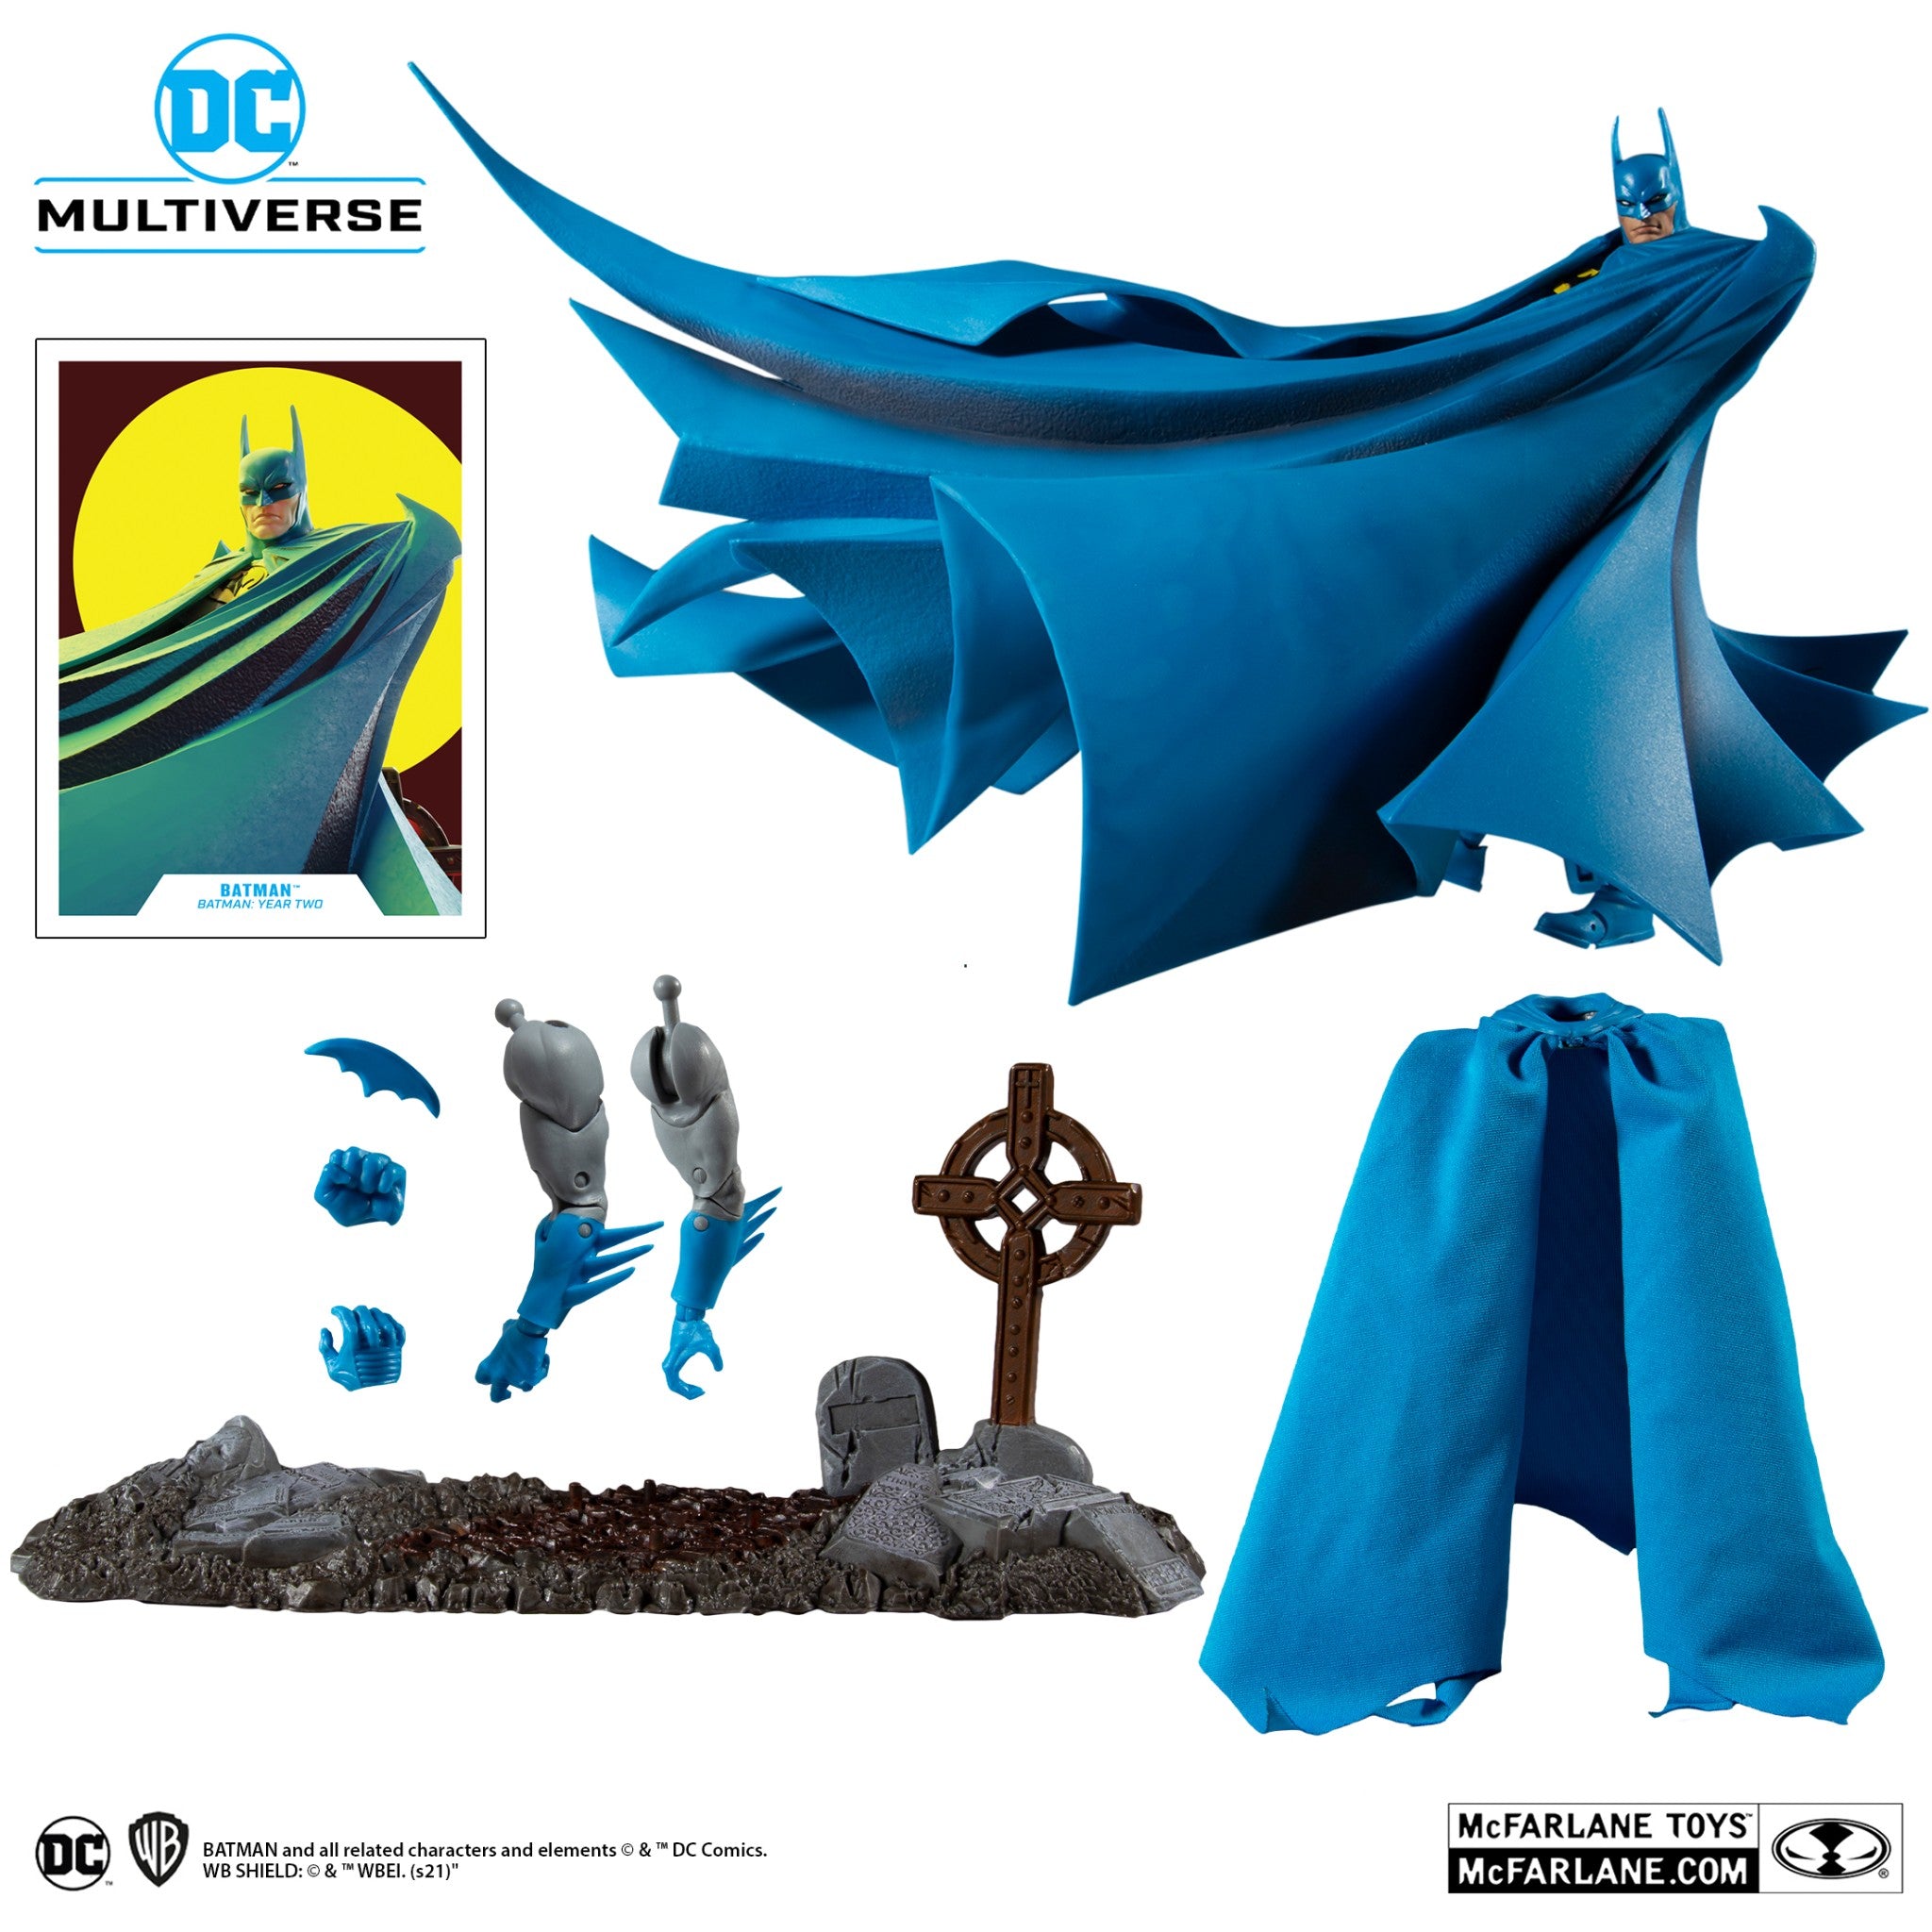 DC Multiverse Batman Year Two 2 Gold Label Designer Edition - McFarlane Toys